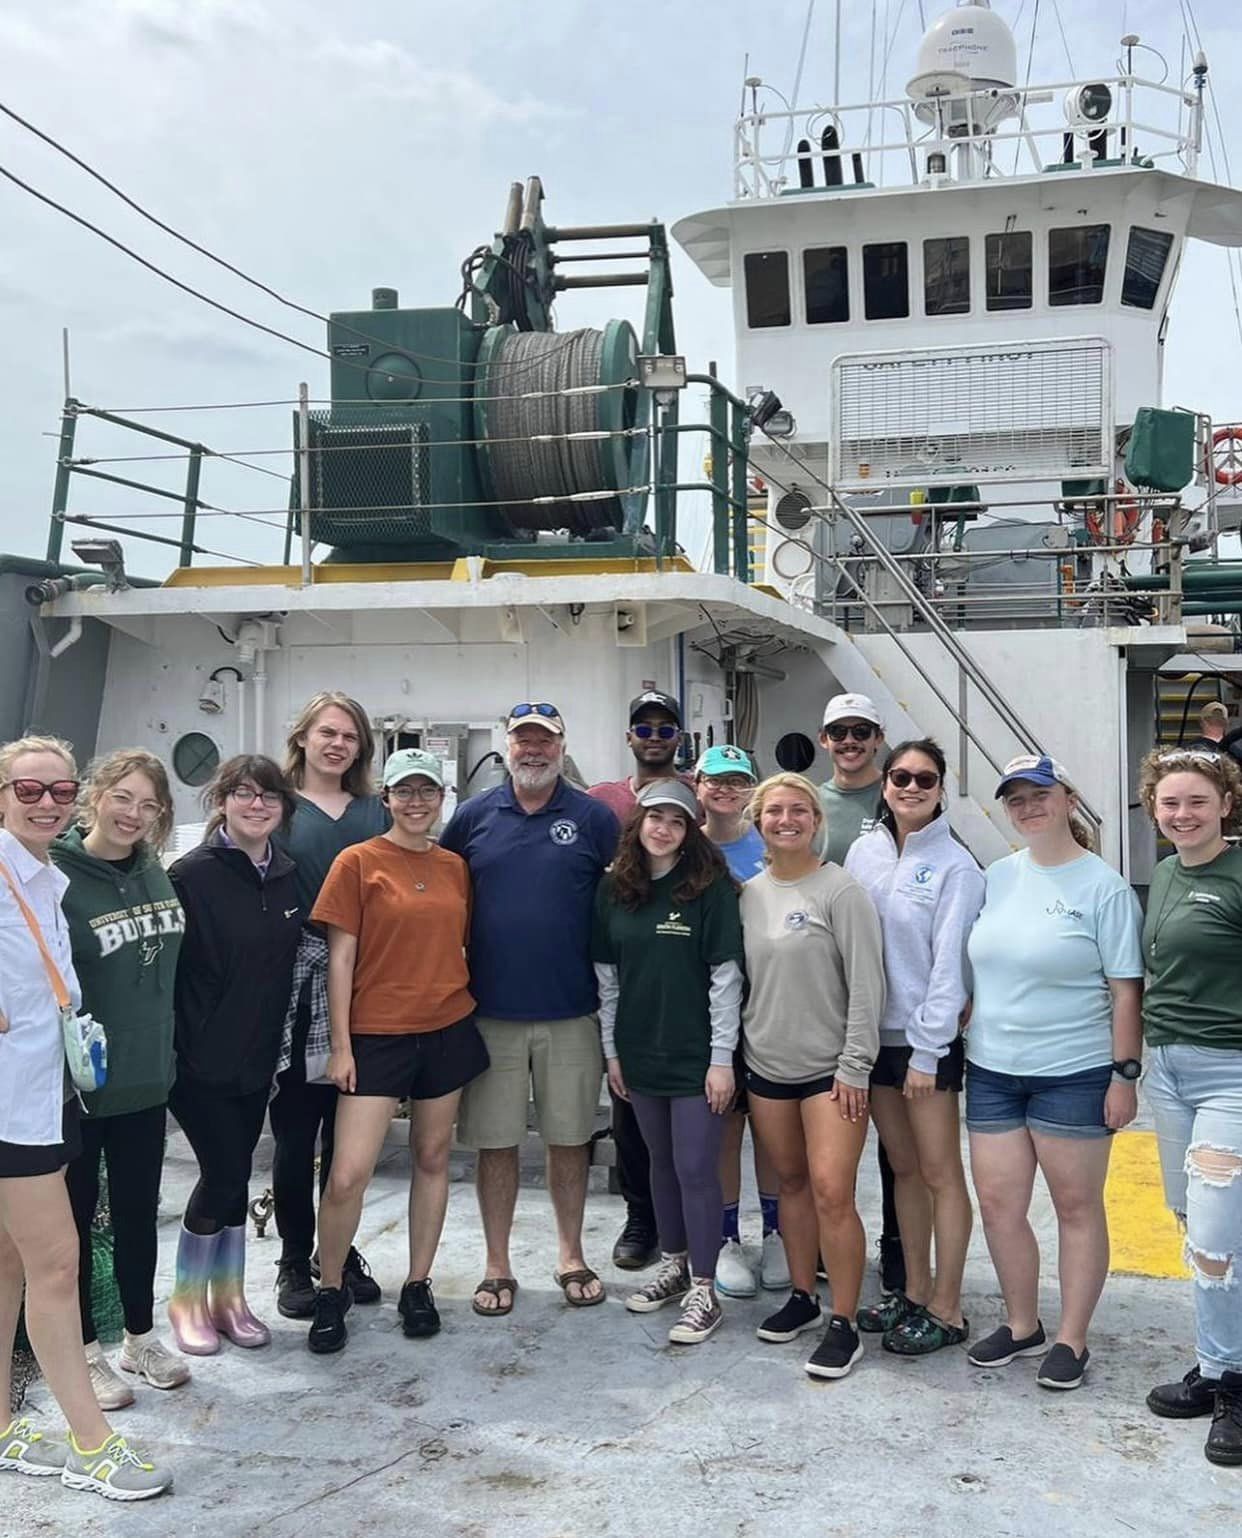 Honoring the ocean program - Launched across five Florida universities